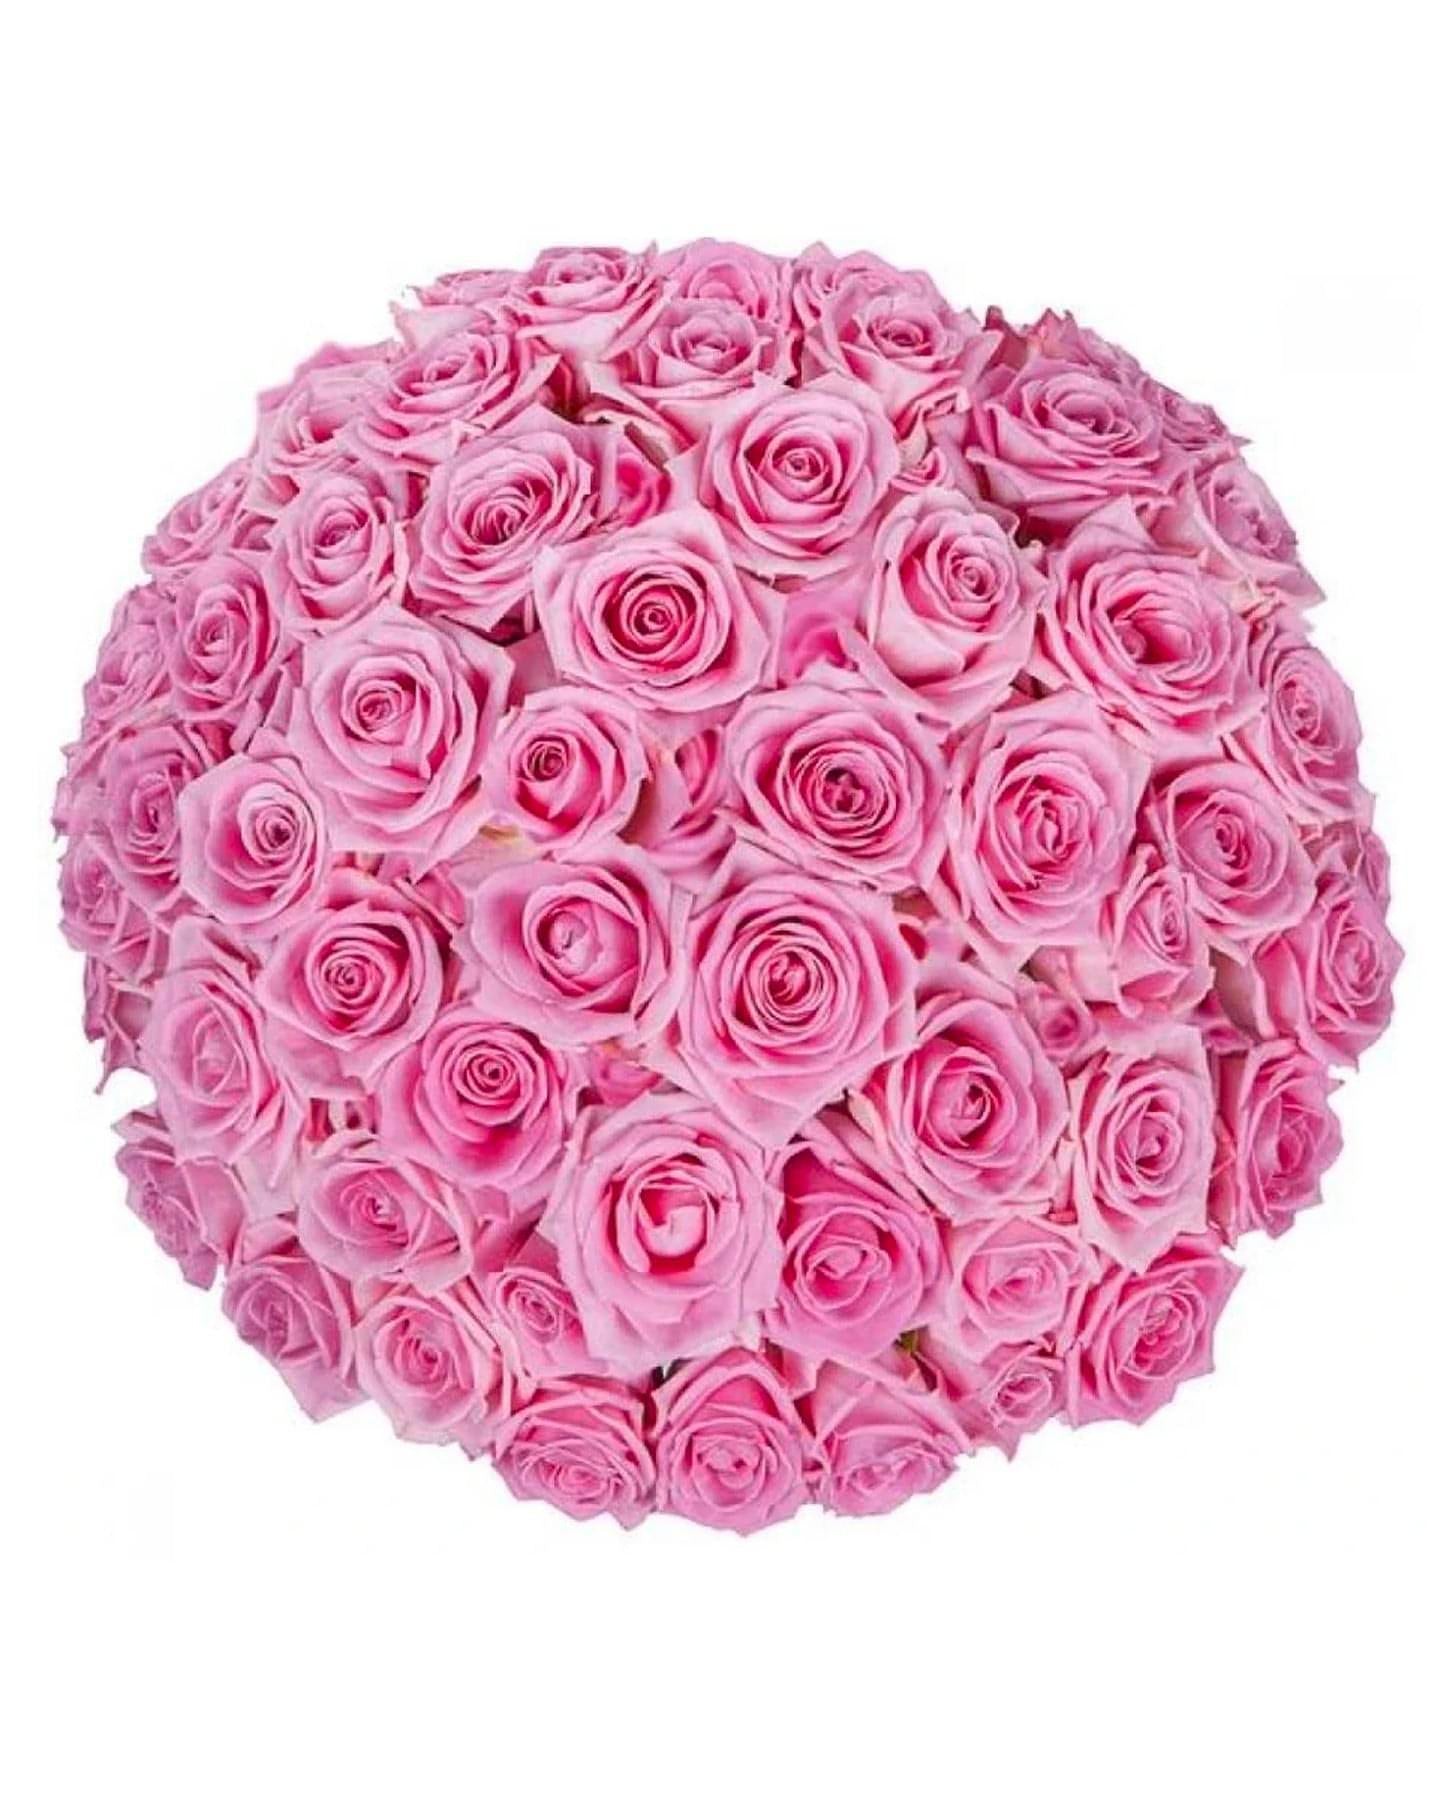 Luxury-Pink-Roses-Flower-Bouquet-Dubai